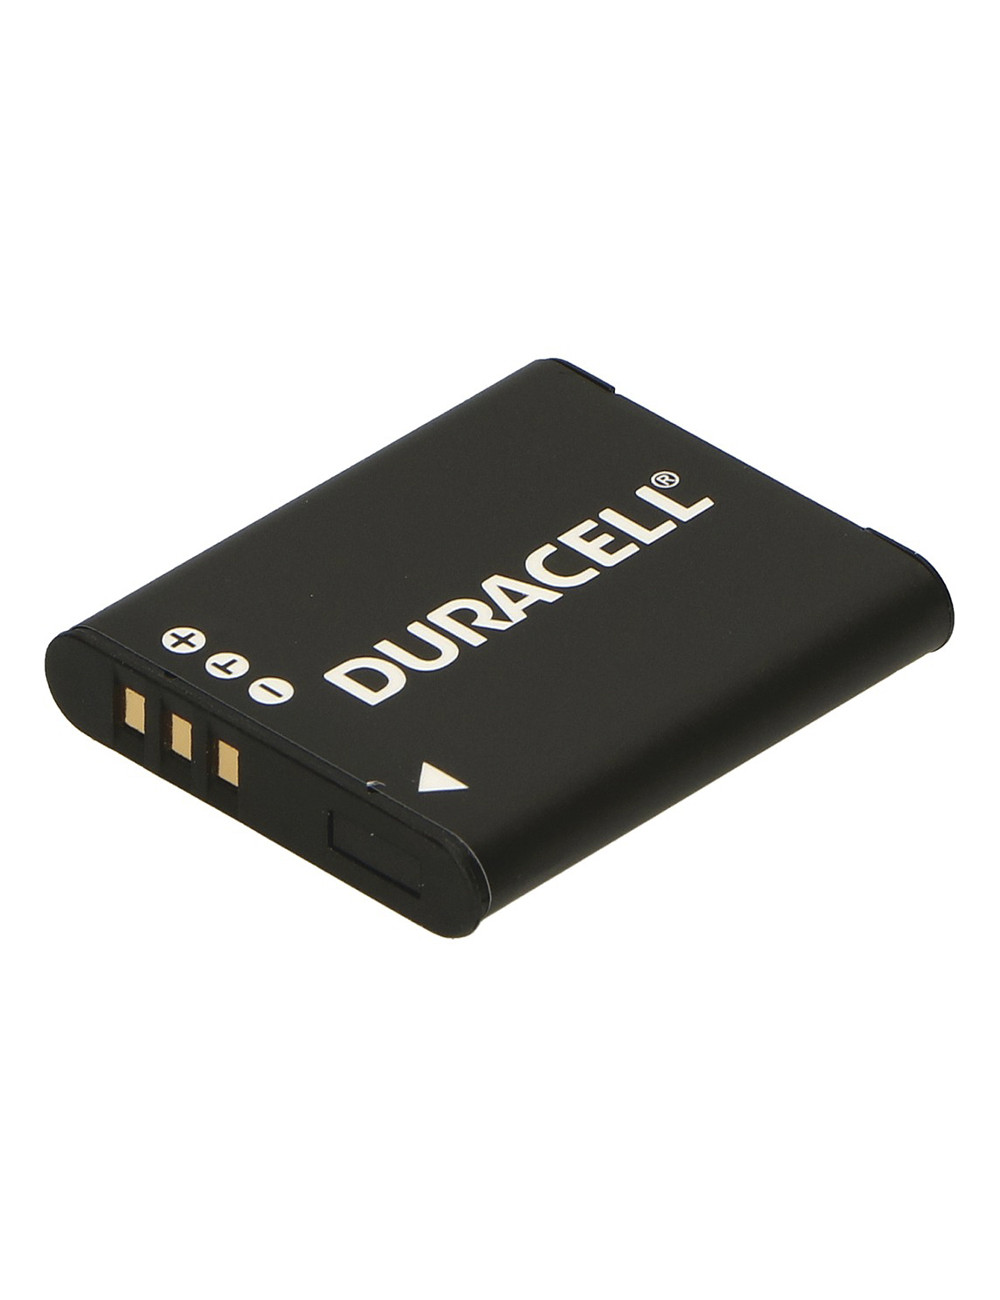 Batería compatible Pentax D-LI92 3,7V 770mAh 2,8Wh Duracell - DR9686 -  - 5055190114131 - 1